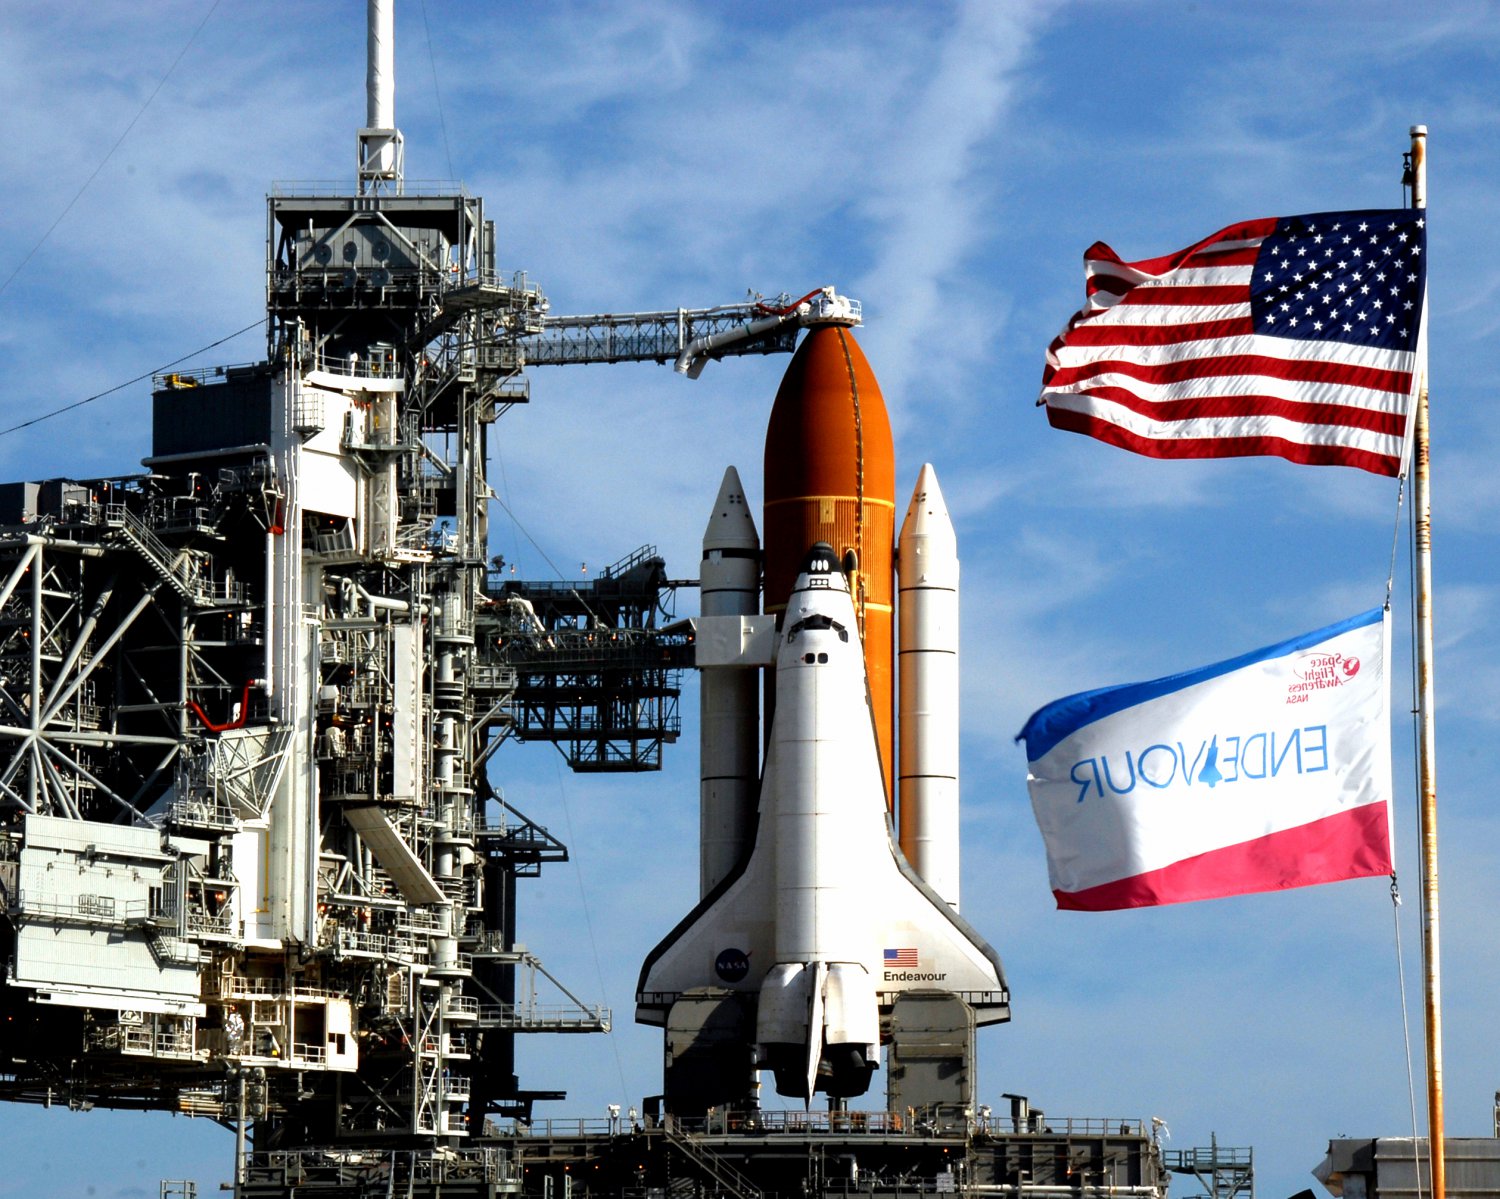 space shuttle endeavour launch date